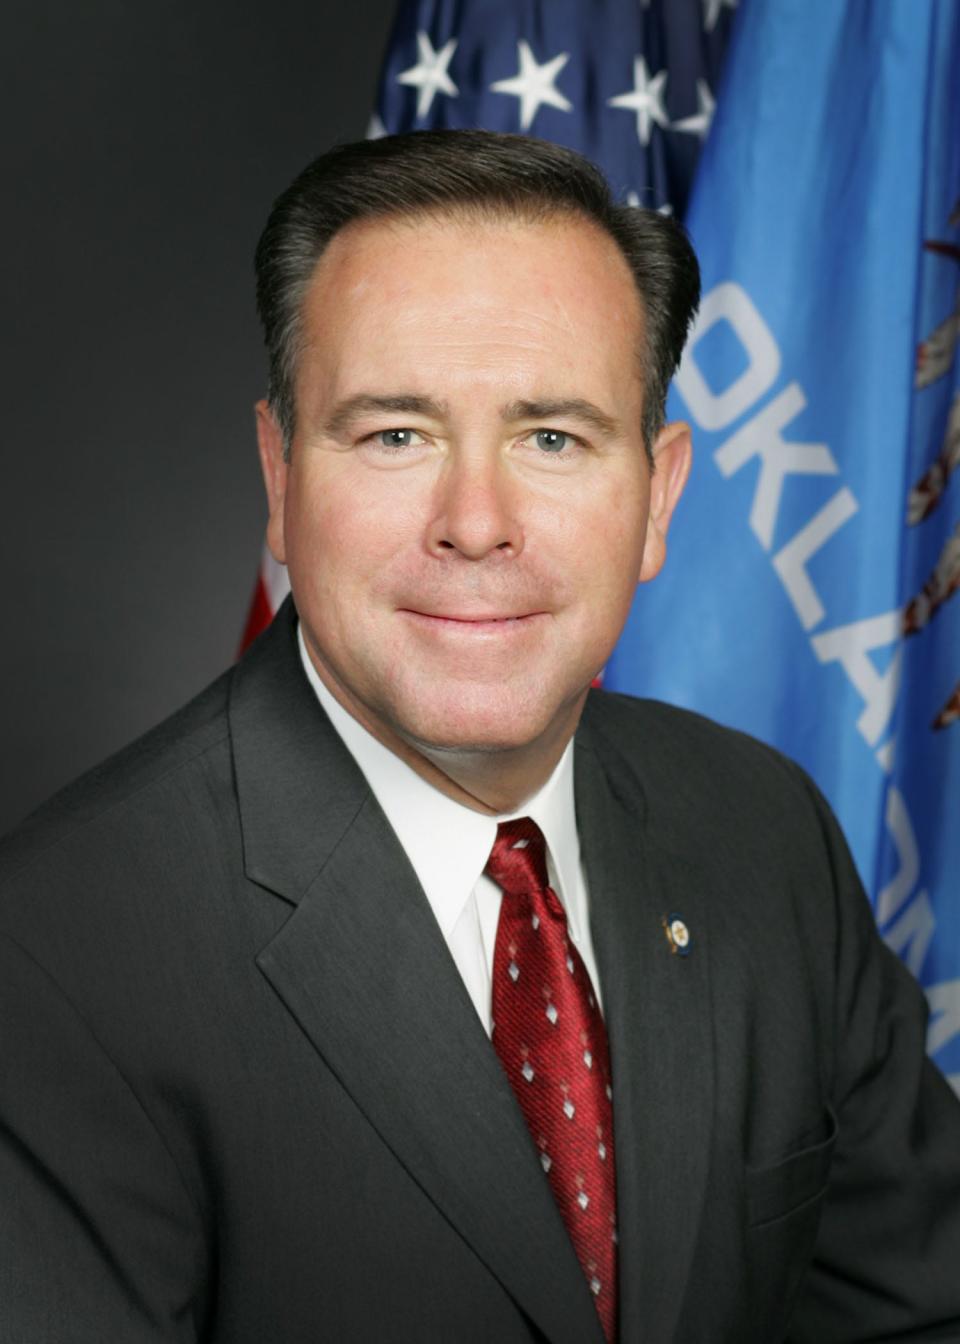 Oklahoma Treasurer Todd Russ